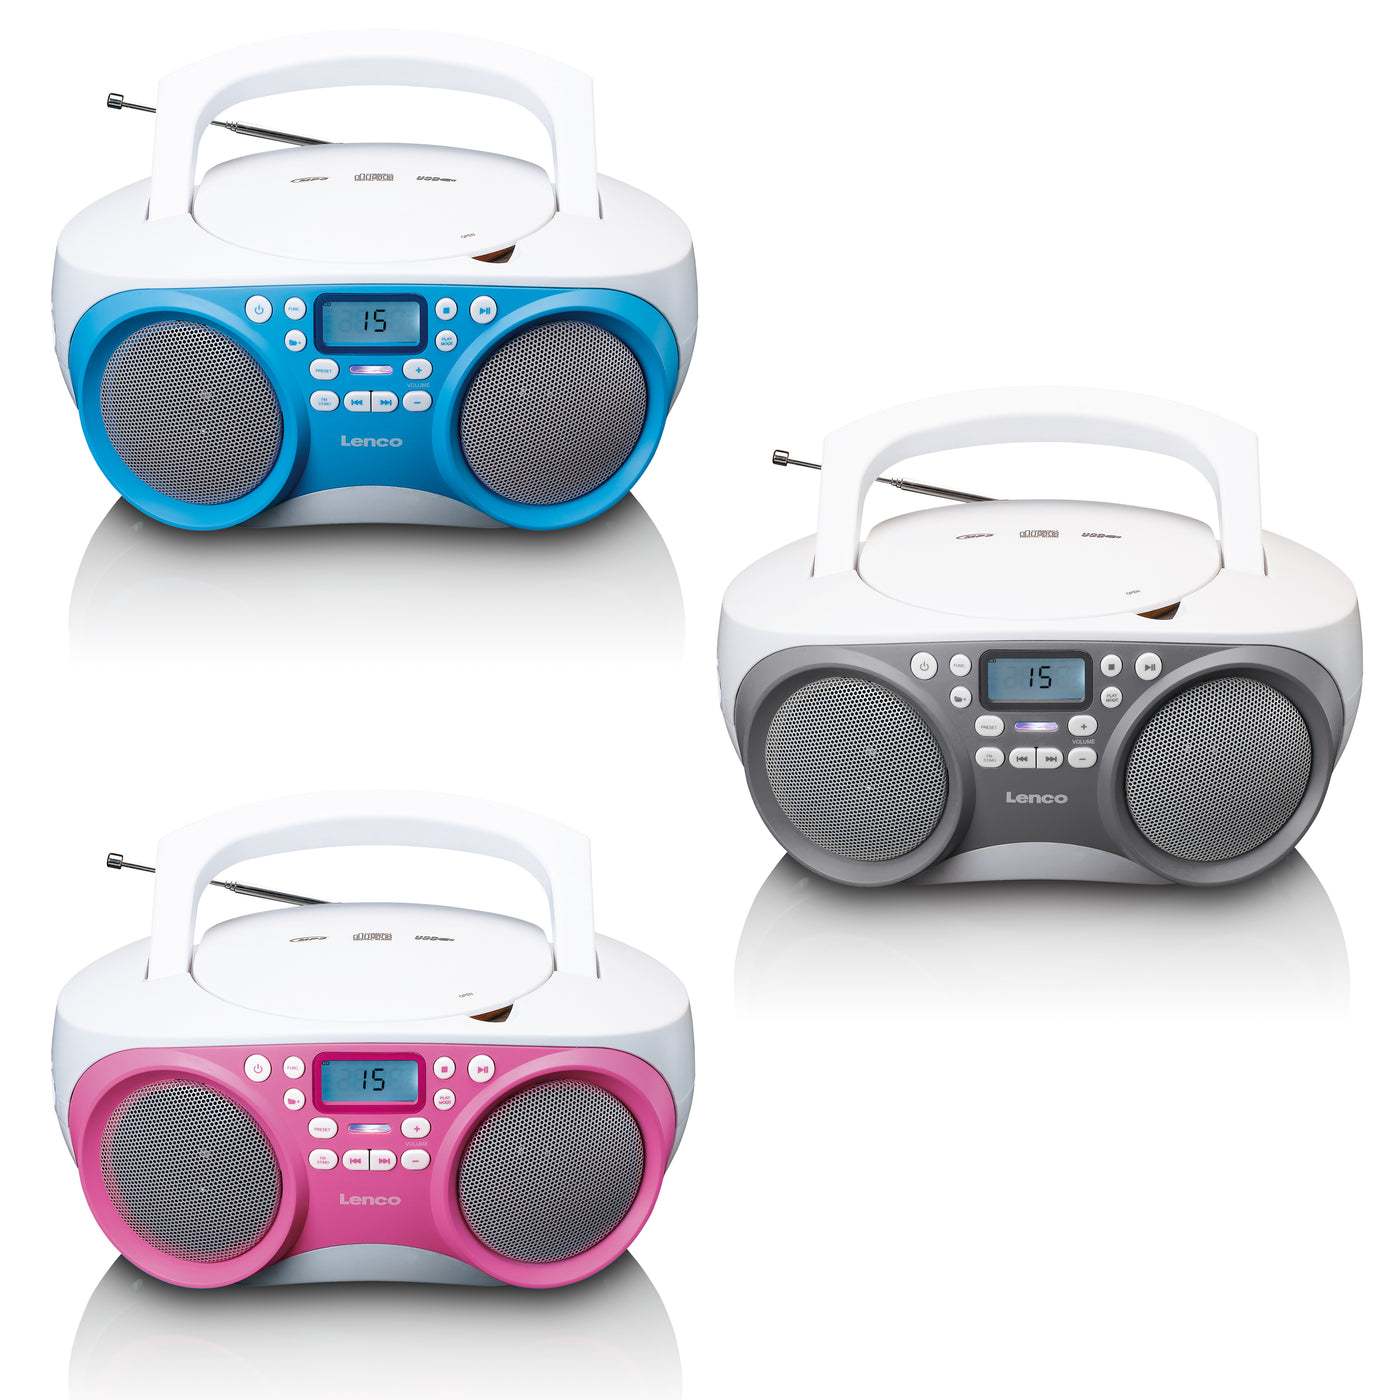 LENCO SCD-301GY - Portable FM Radio/CD/MP3 and USB player - Grey